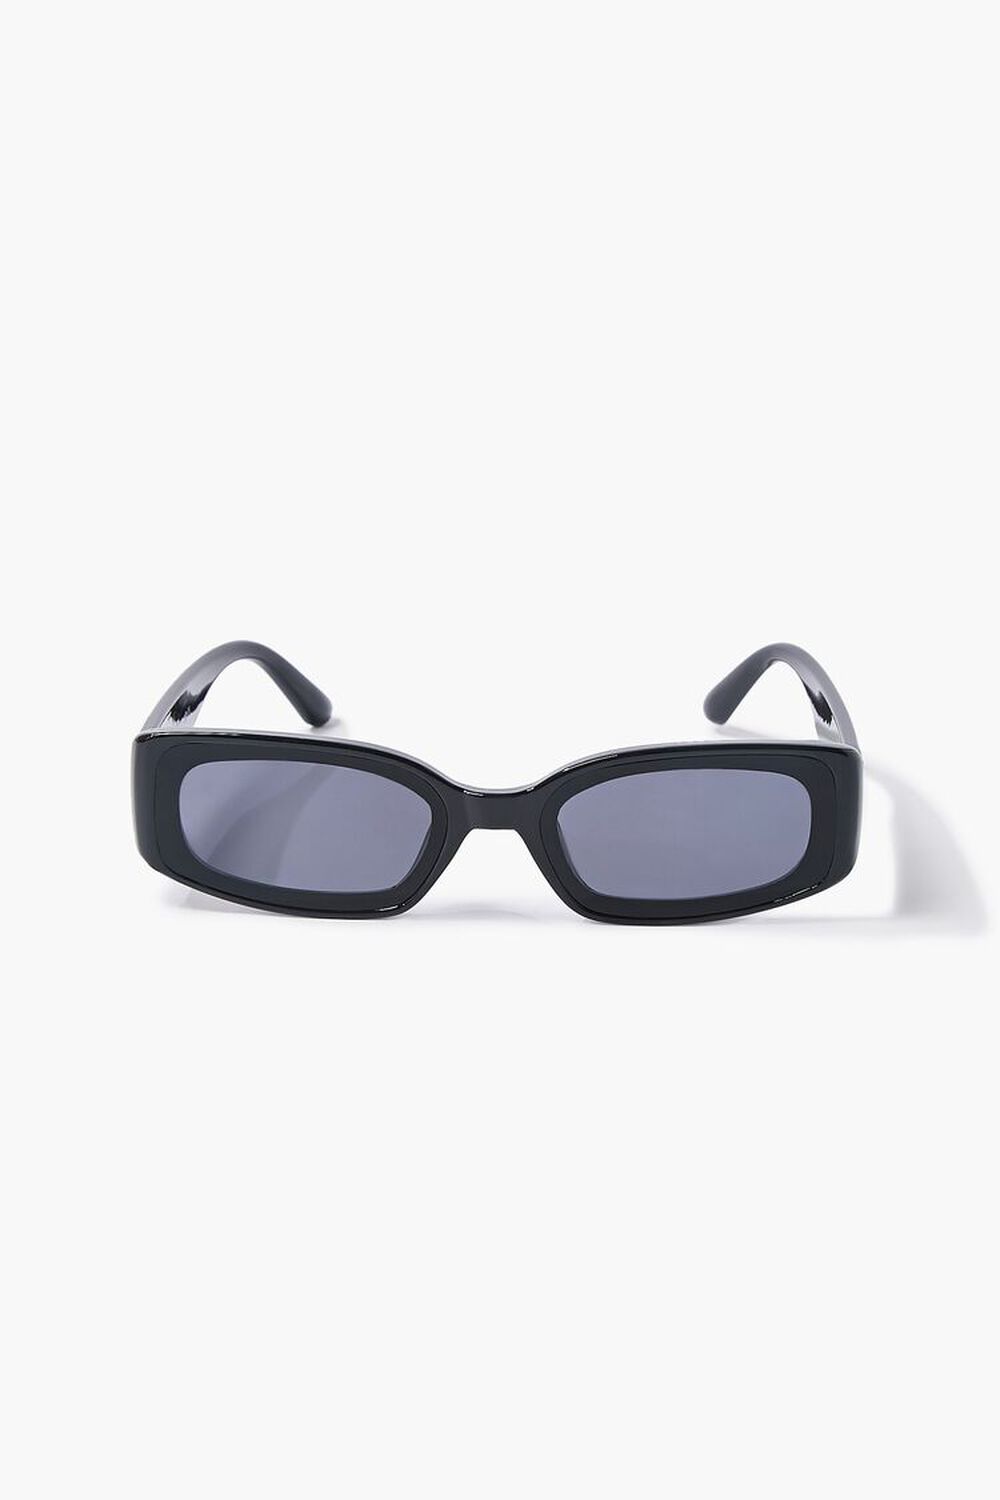 Rectangle Tinted Sunglasses, image 1